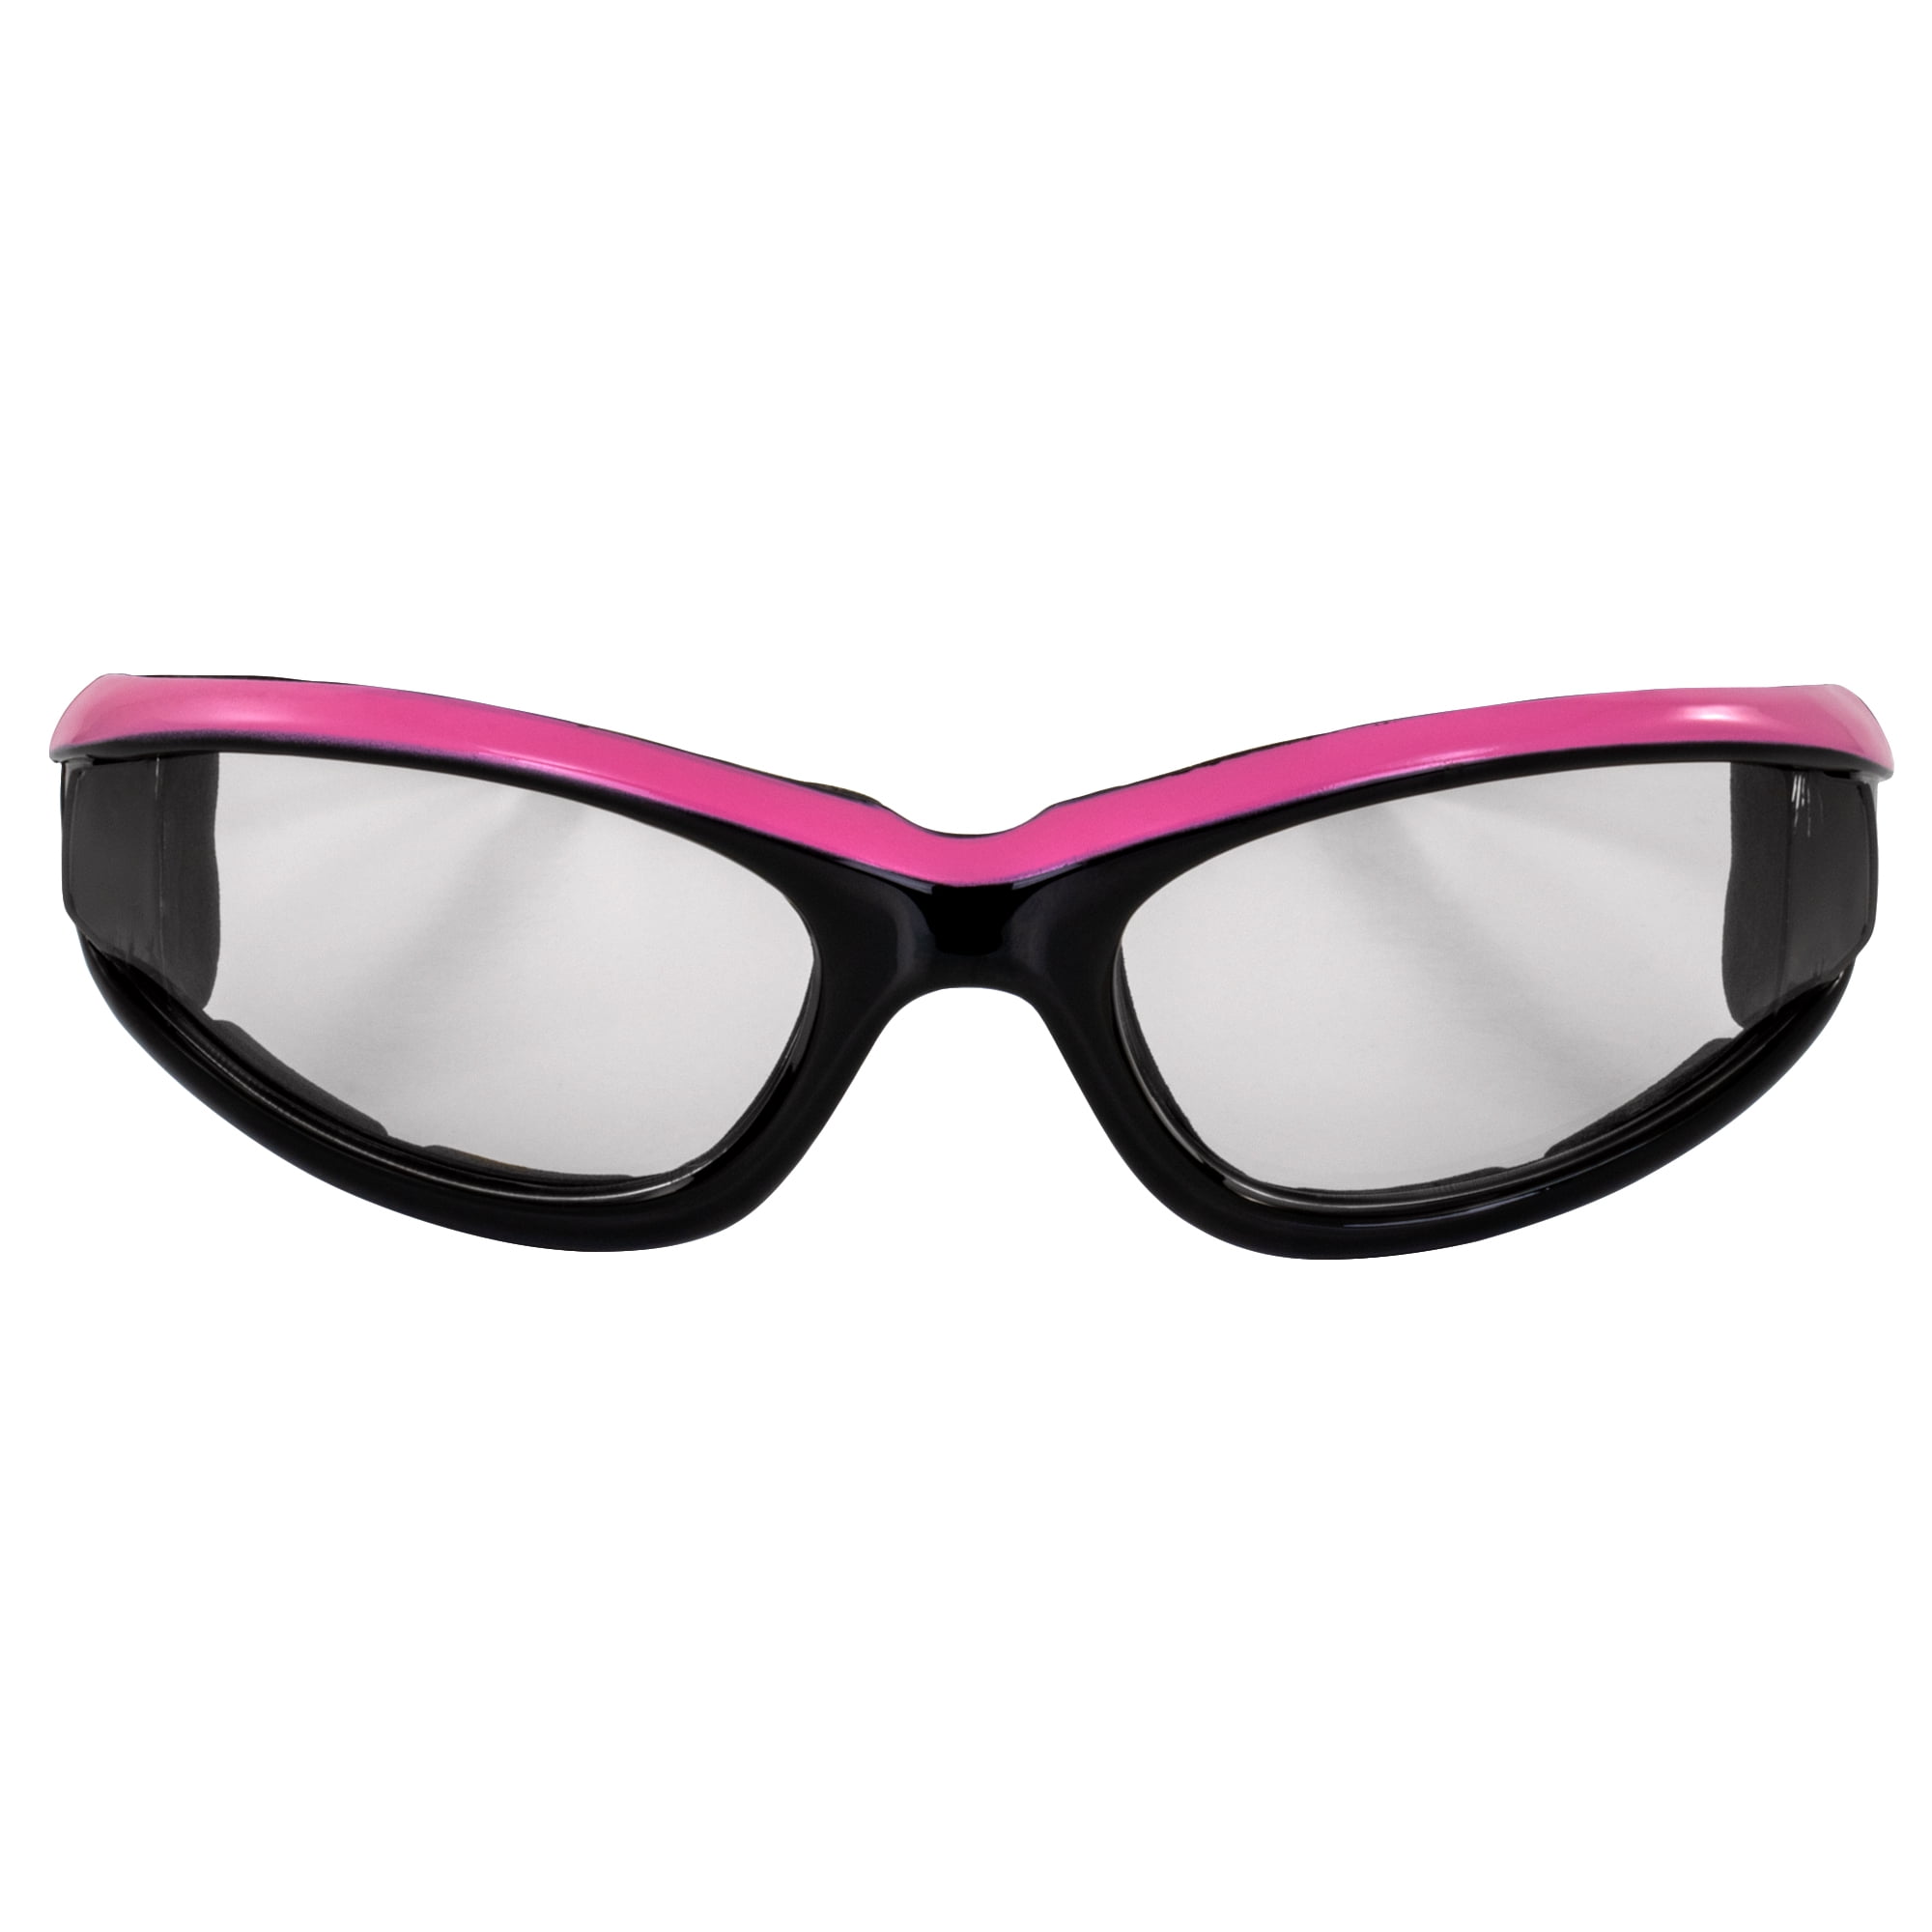 OWL Foam Padded Motorcycle Sunglasses UV400 Smoke Lens (Pink